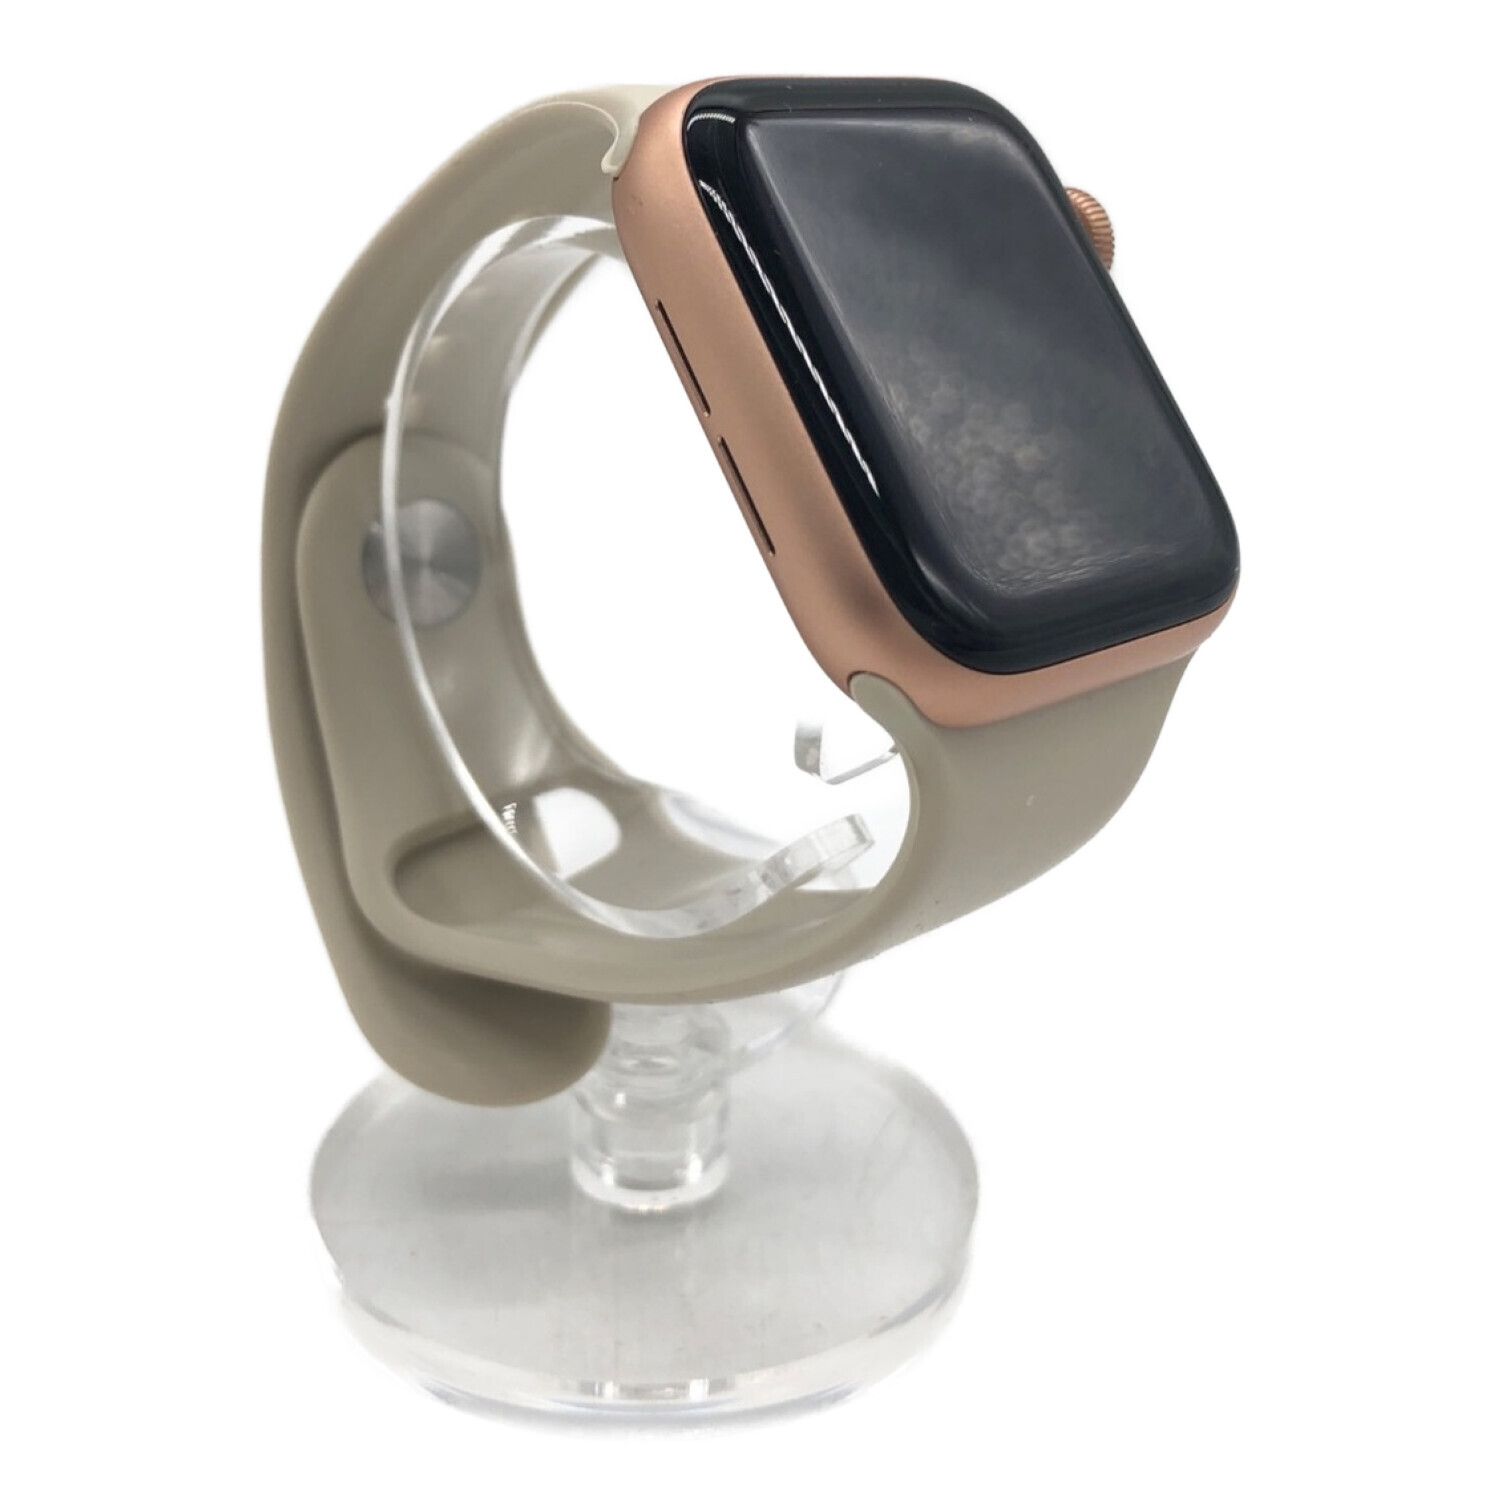 AppleWatchSEApple Watch SE 40mm バンド・充電器付き